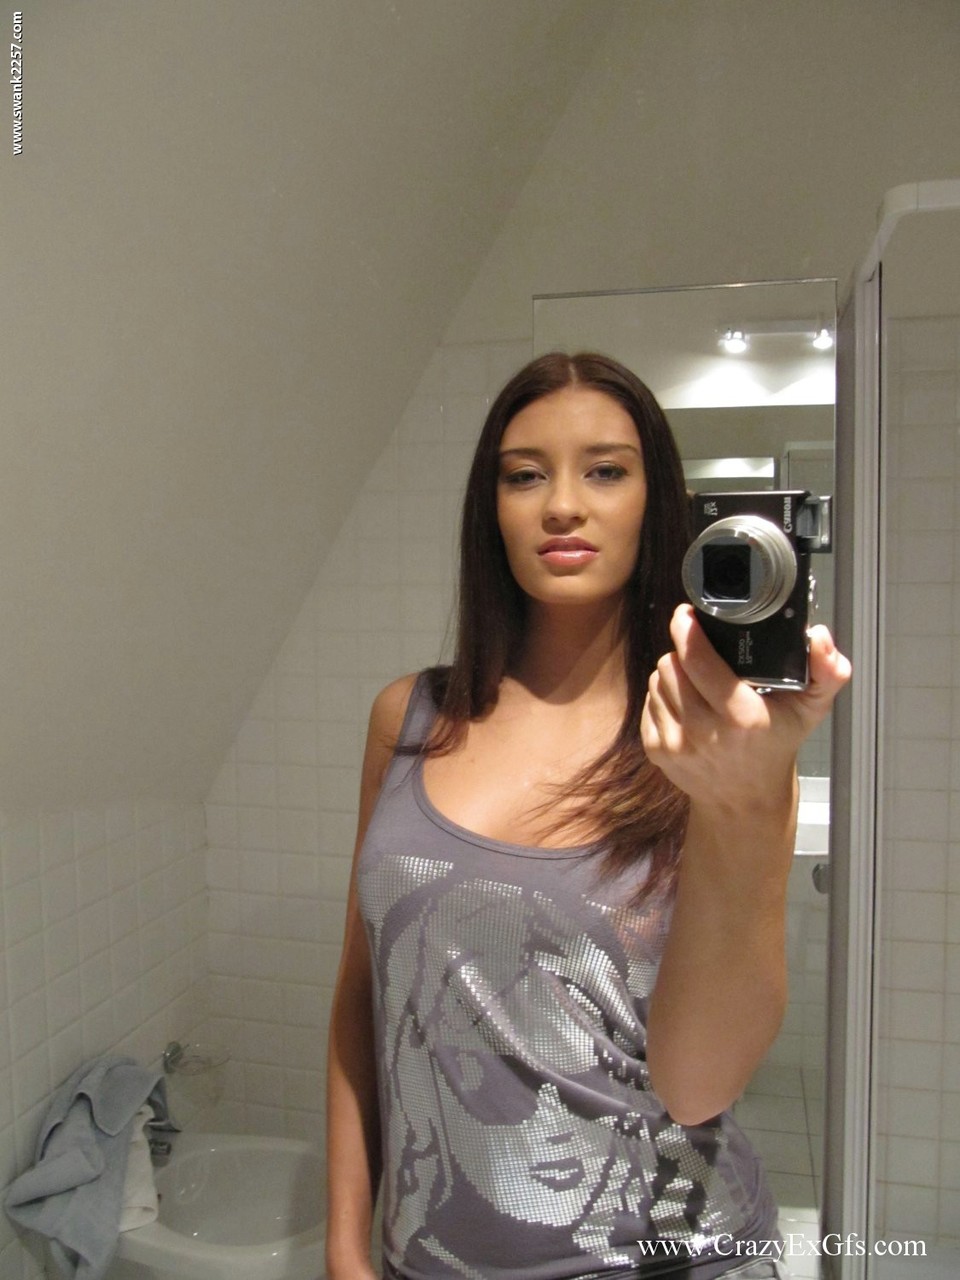 Amateur chick takes mirror selfies